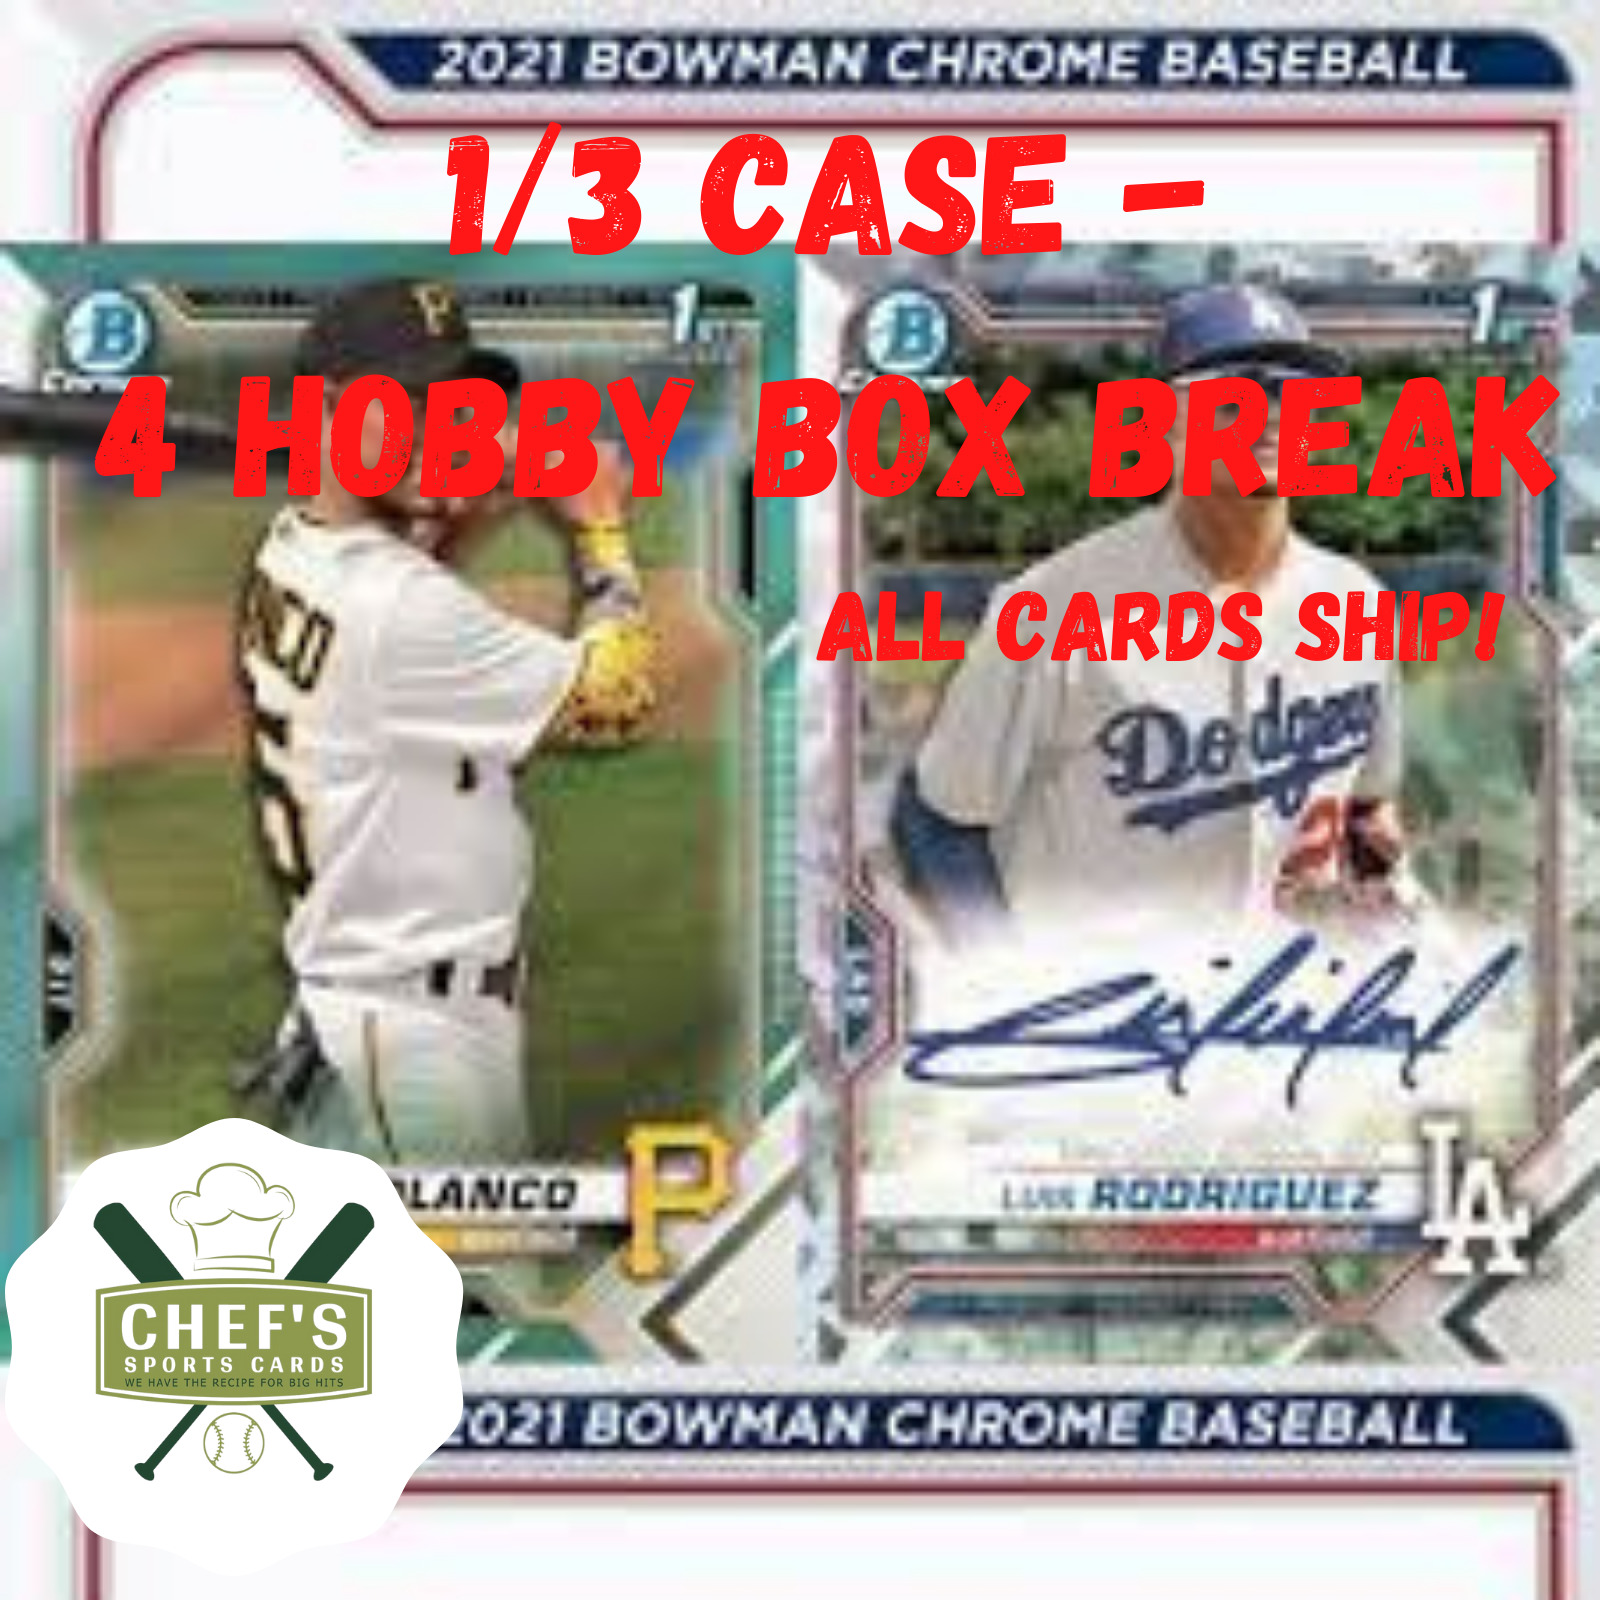 SAN DIEGO PADRES - 2021 BOWMAN CHROME BASEBALL - 1/3 CASE (4BOX) BREAK #1